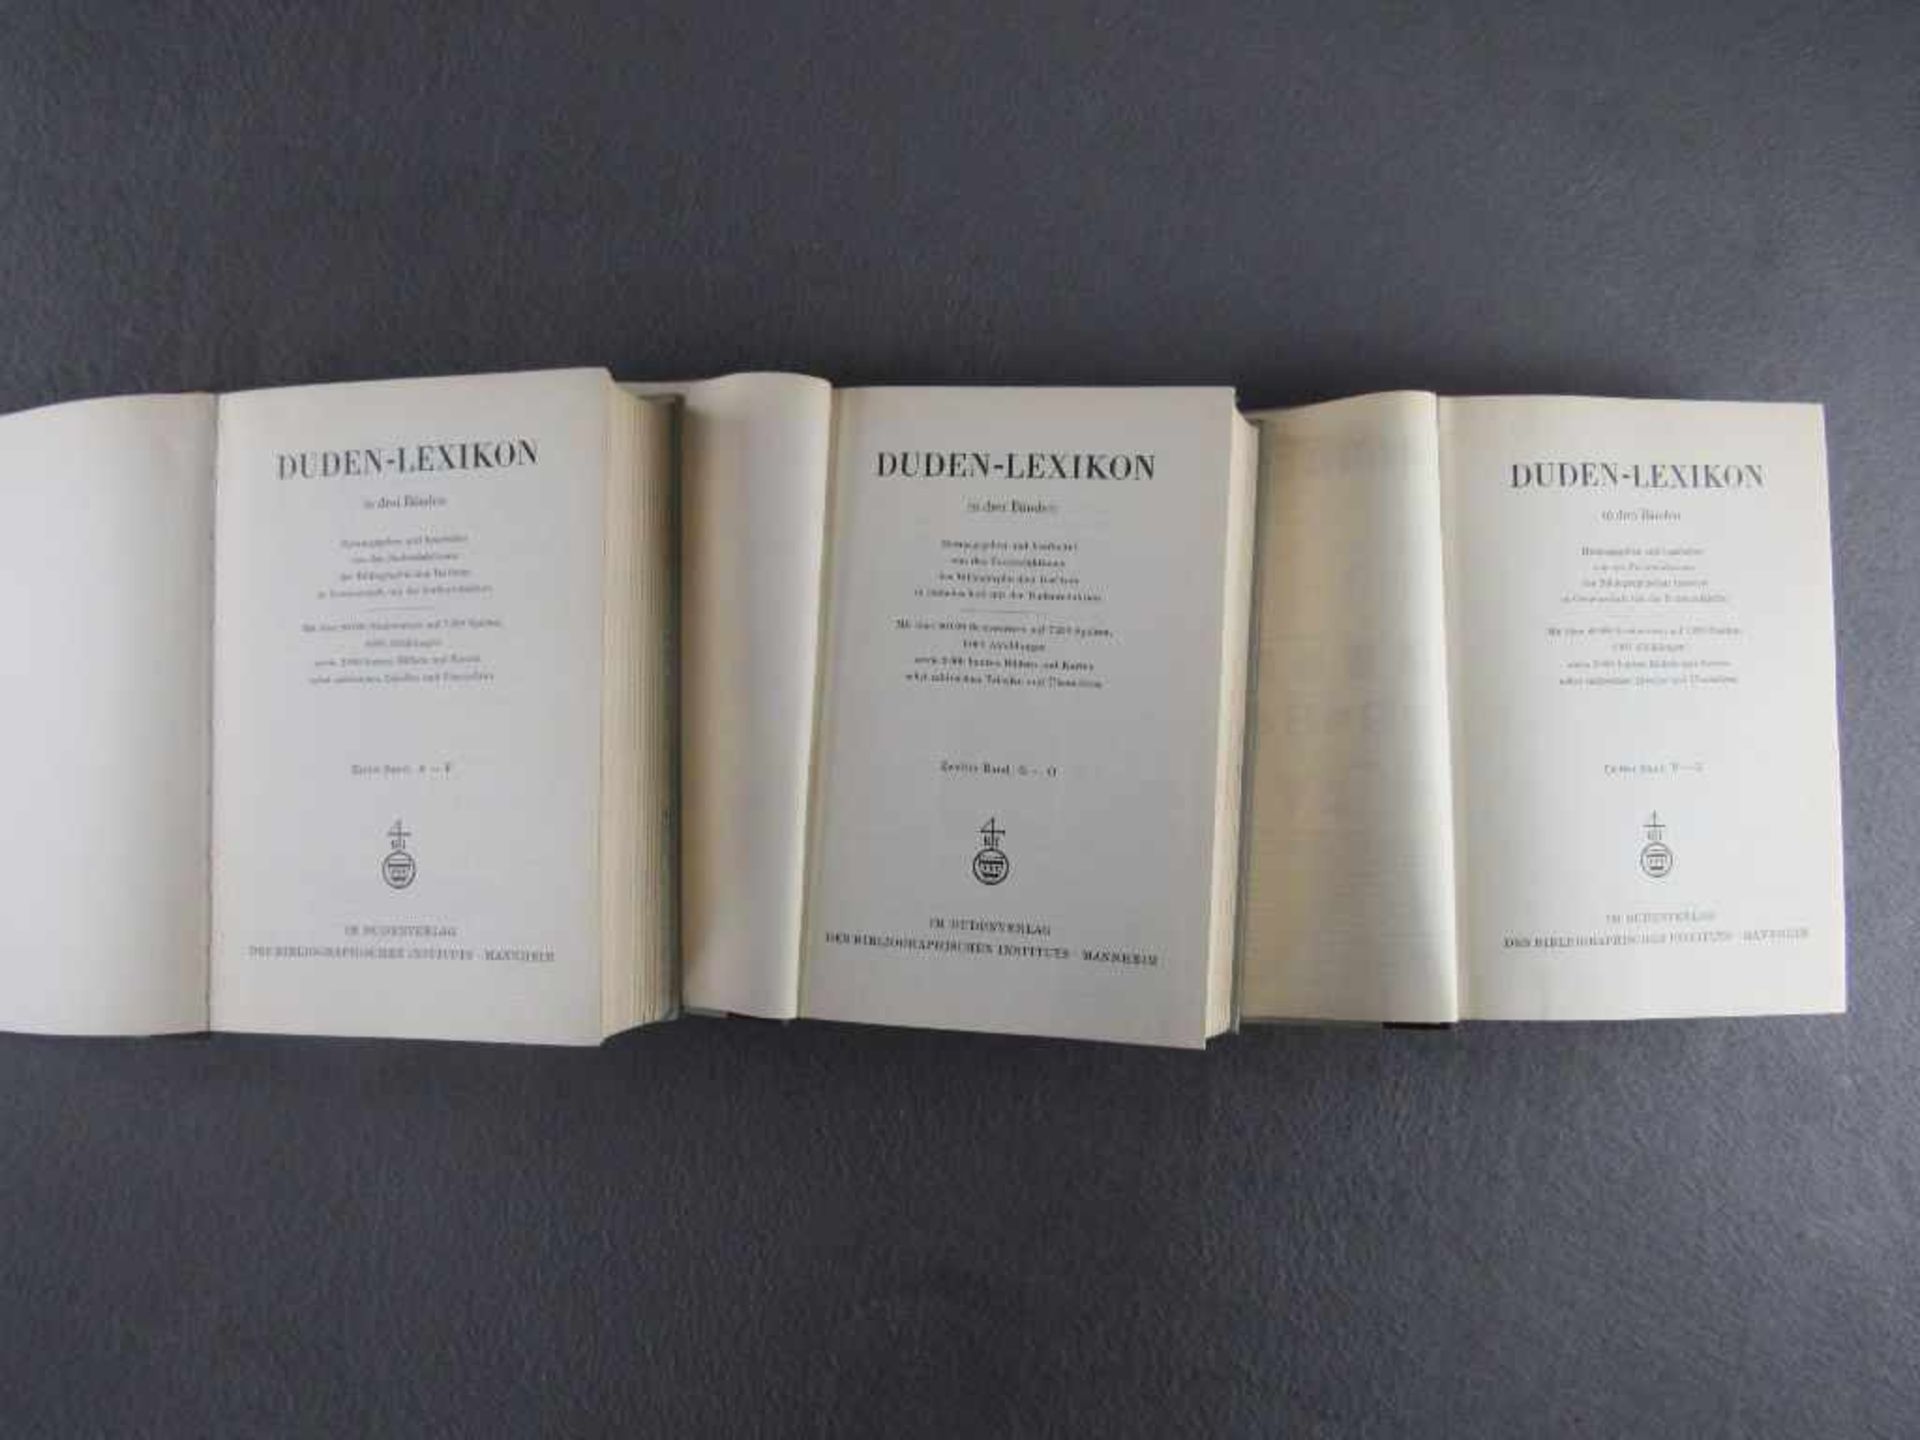 Duden Lexikon drei Bände< - Image 2 of 2